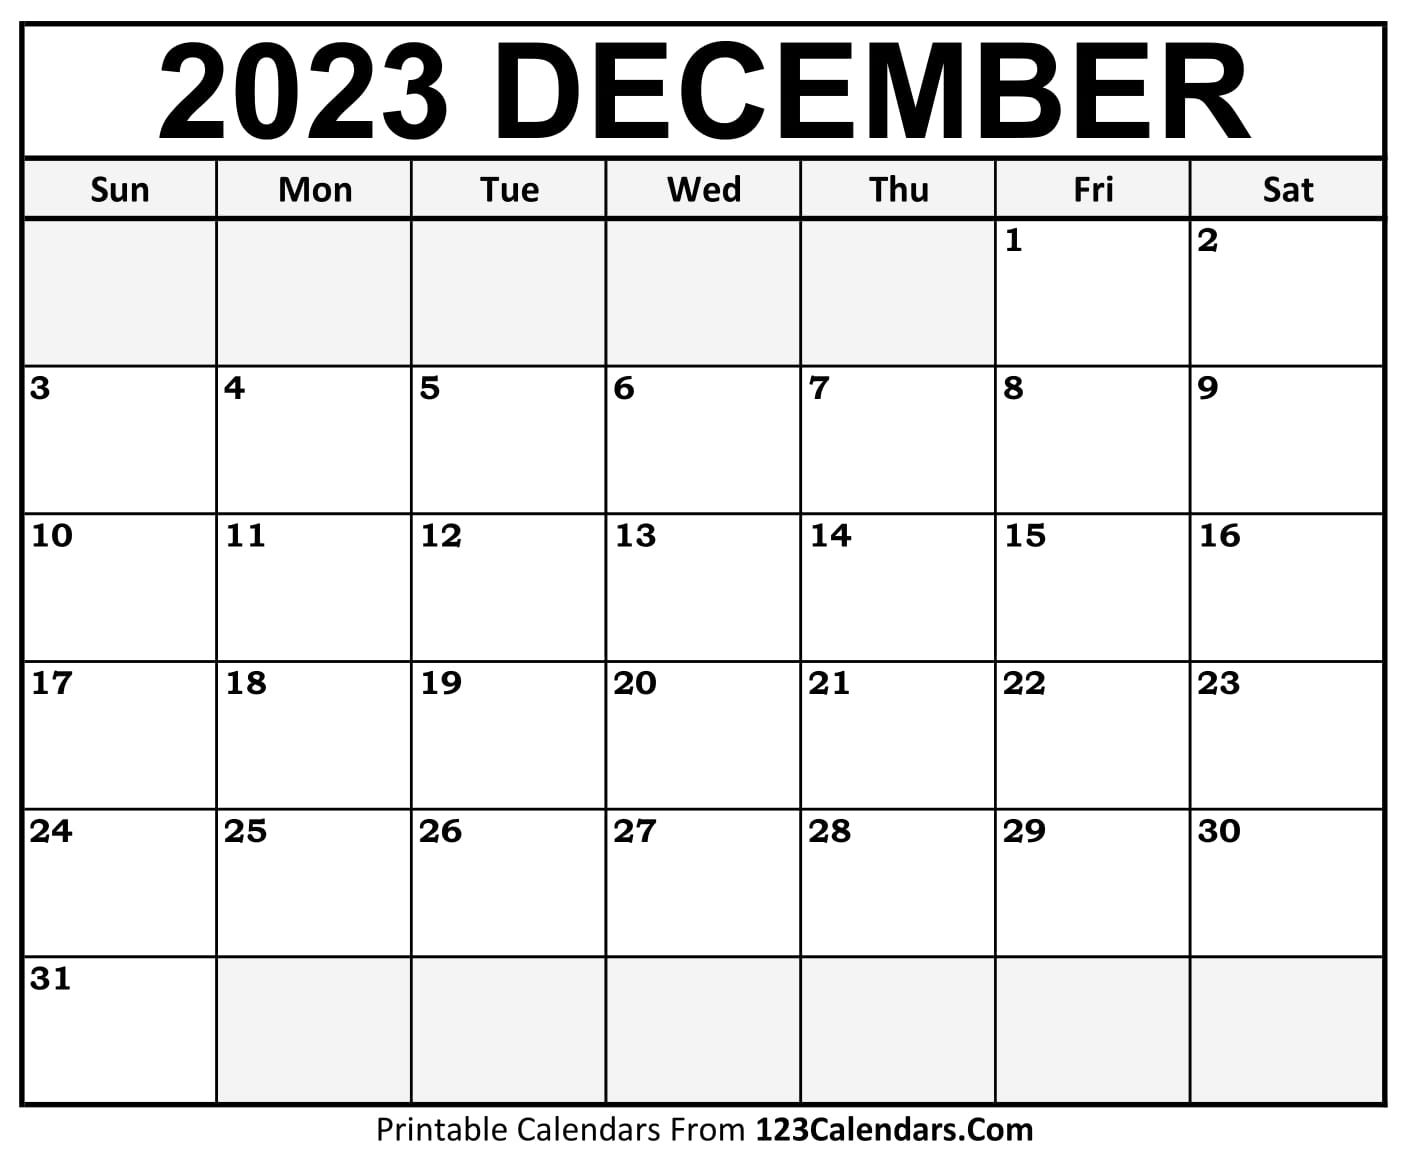 december-2023-calendar-123-printable-get-calendar-2023-update